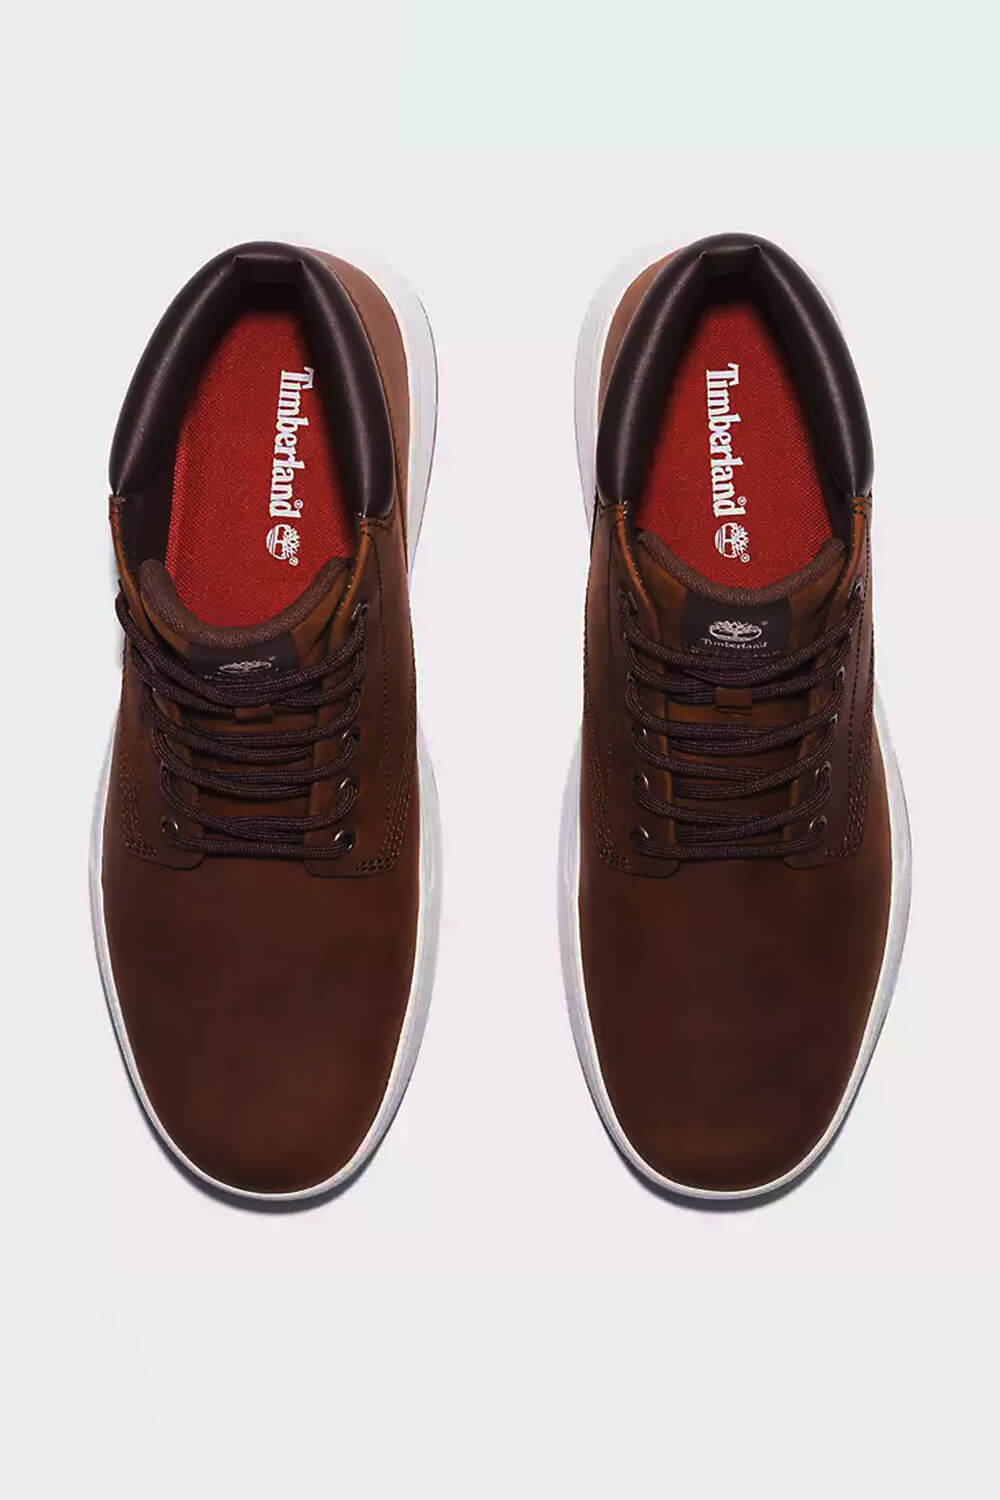 hebben zich vergist Kind Prooi Timberland Maple Grove Chukka Boots for Men in Brown | TB0A297Q358 – Glik's